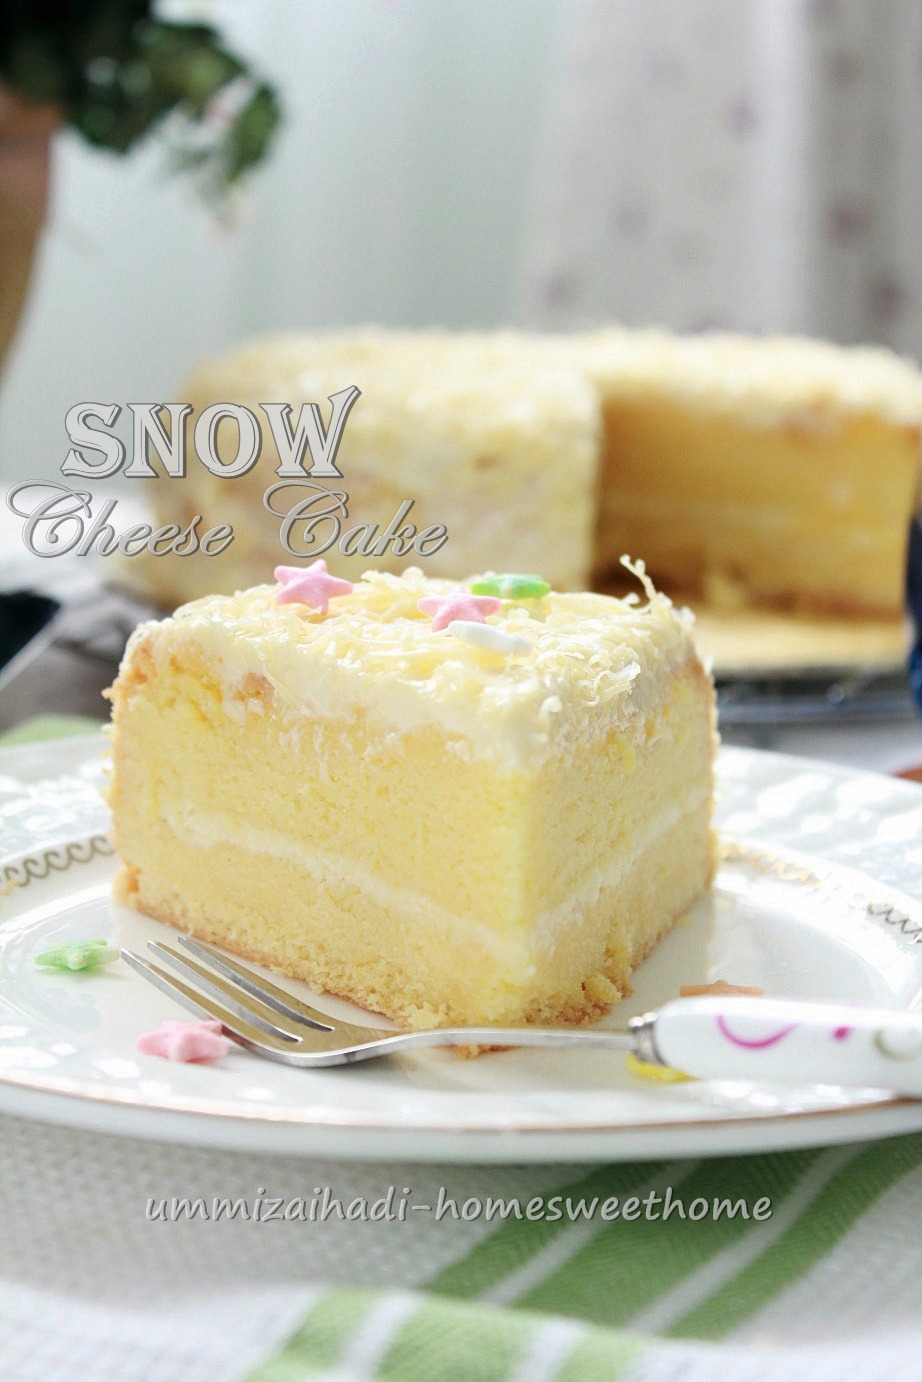 Home Sweet Home: Snow Cheese Cake